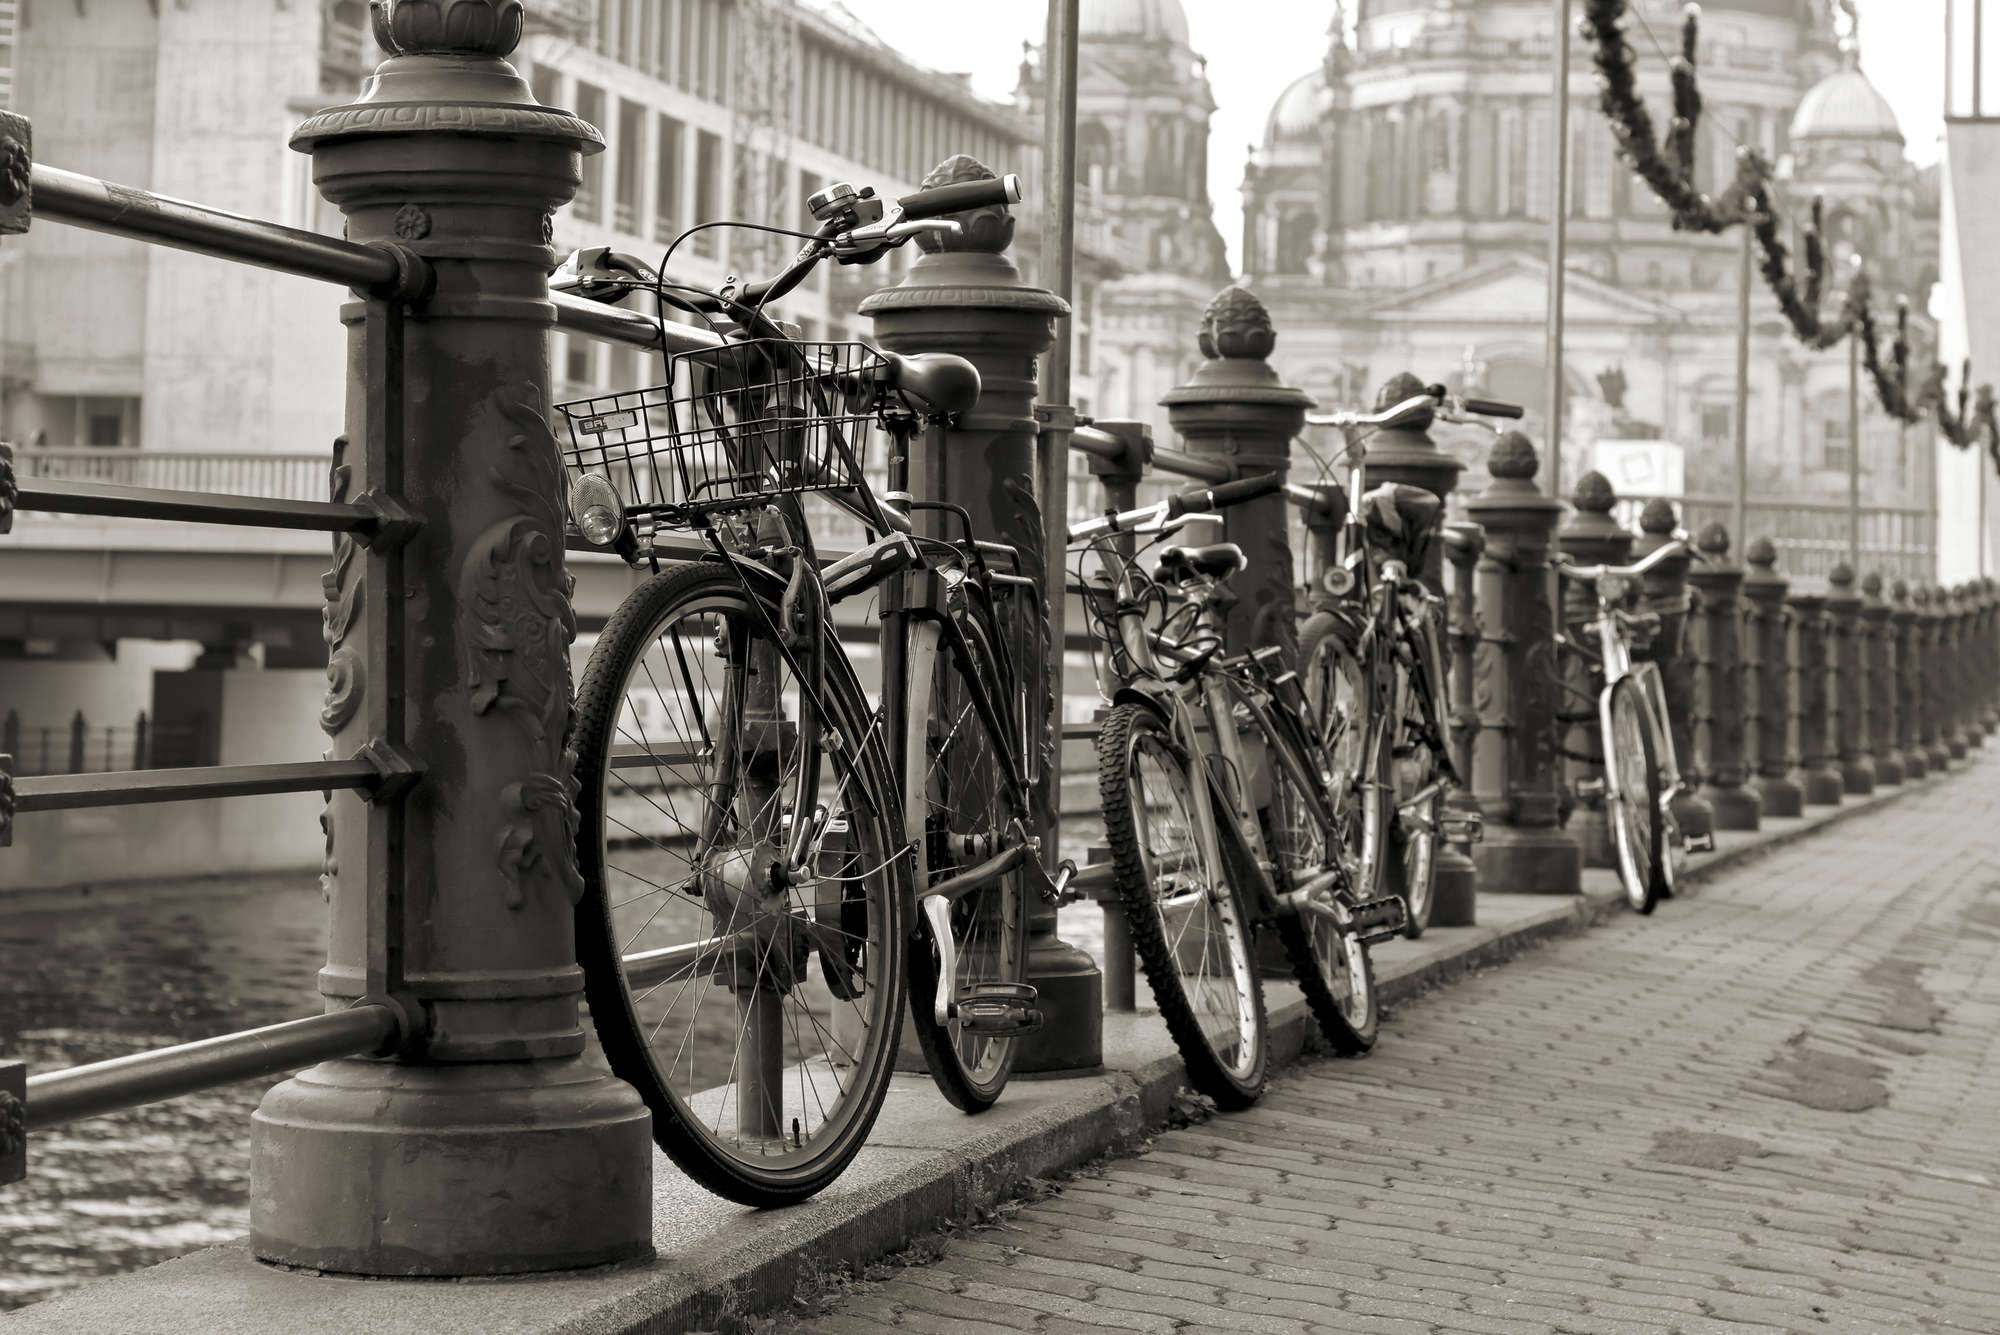             Carta da parati City Bicycles on the River Ringhiera su tessuto non tessuto liscio opaco
        